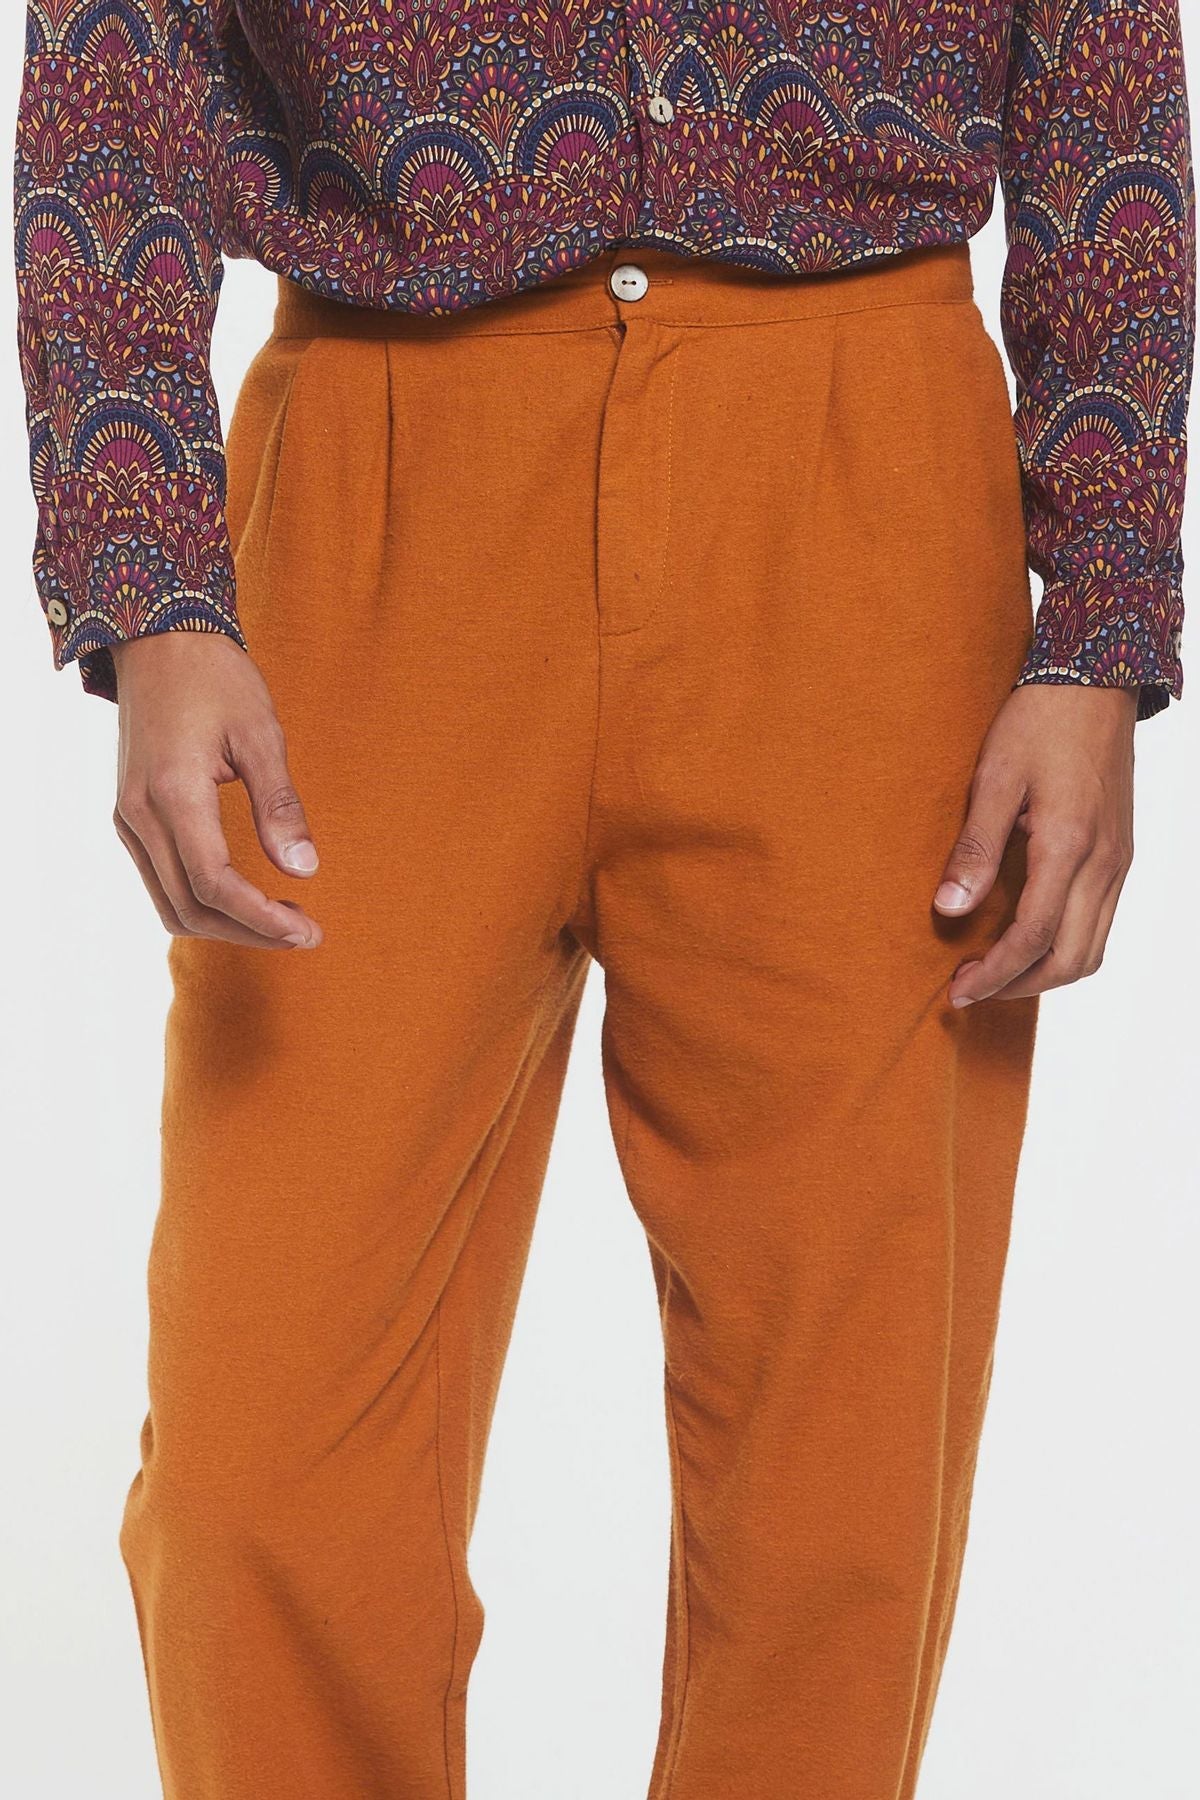 Boho Style High Waist Unisex Cotton Pants Camel